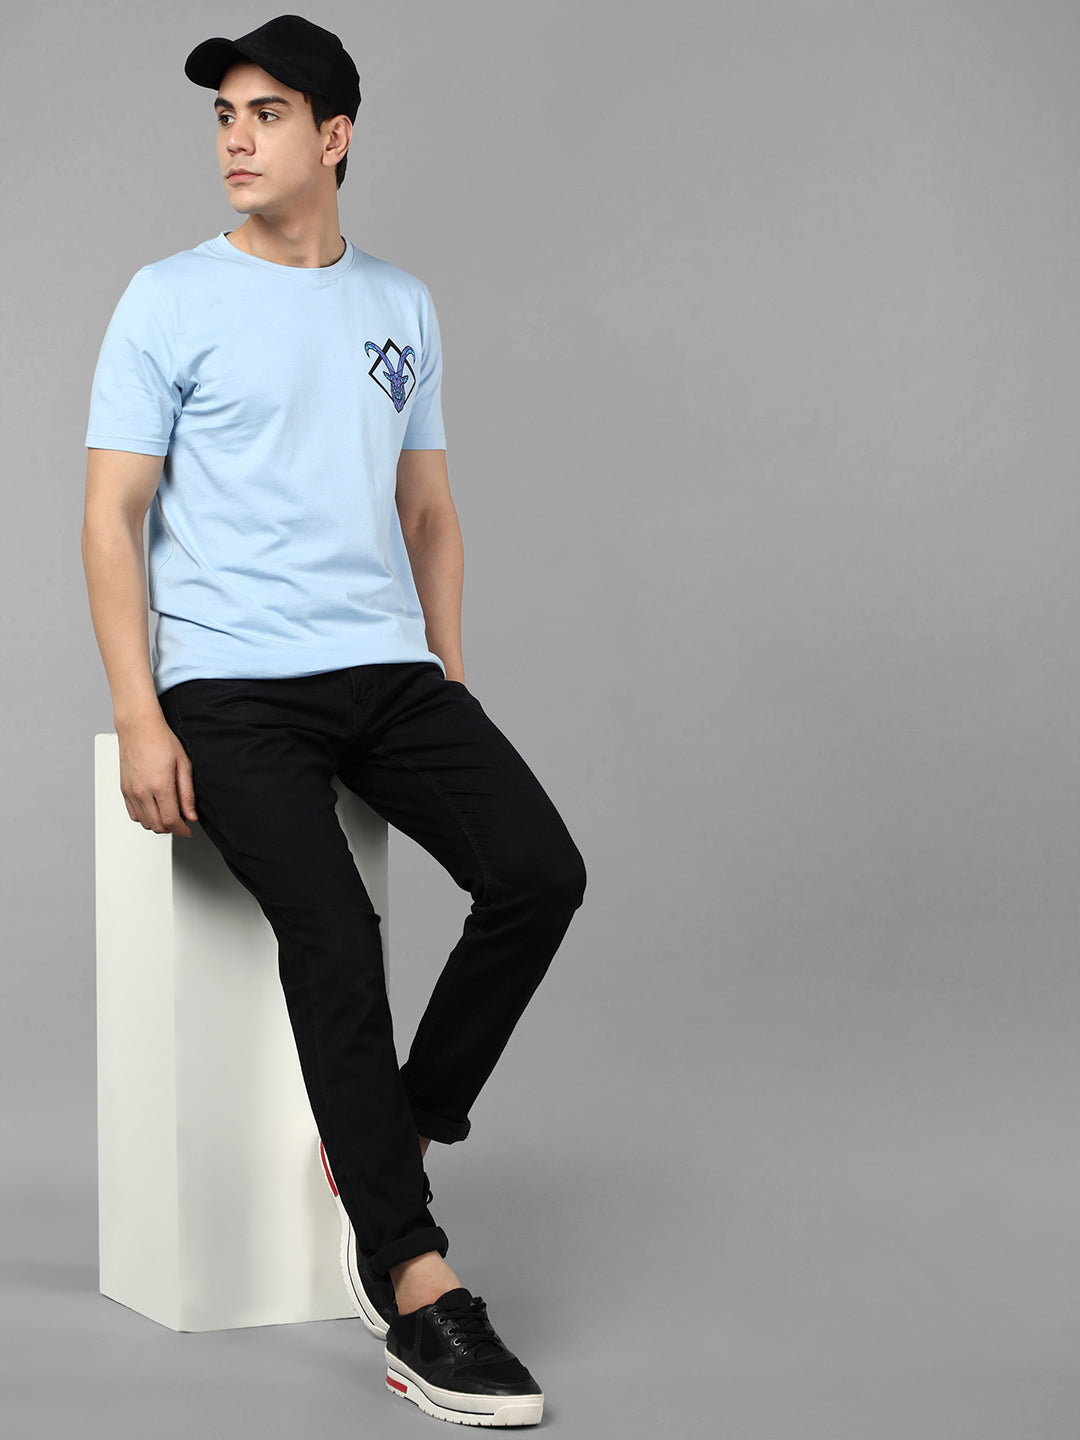 Danny Ibex - Printed Men's Tshirt - Ice Blue